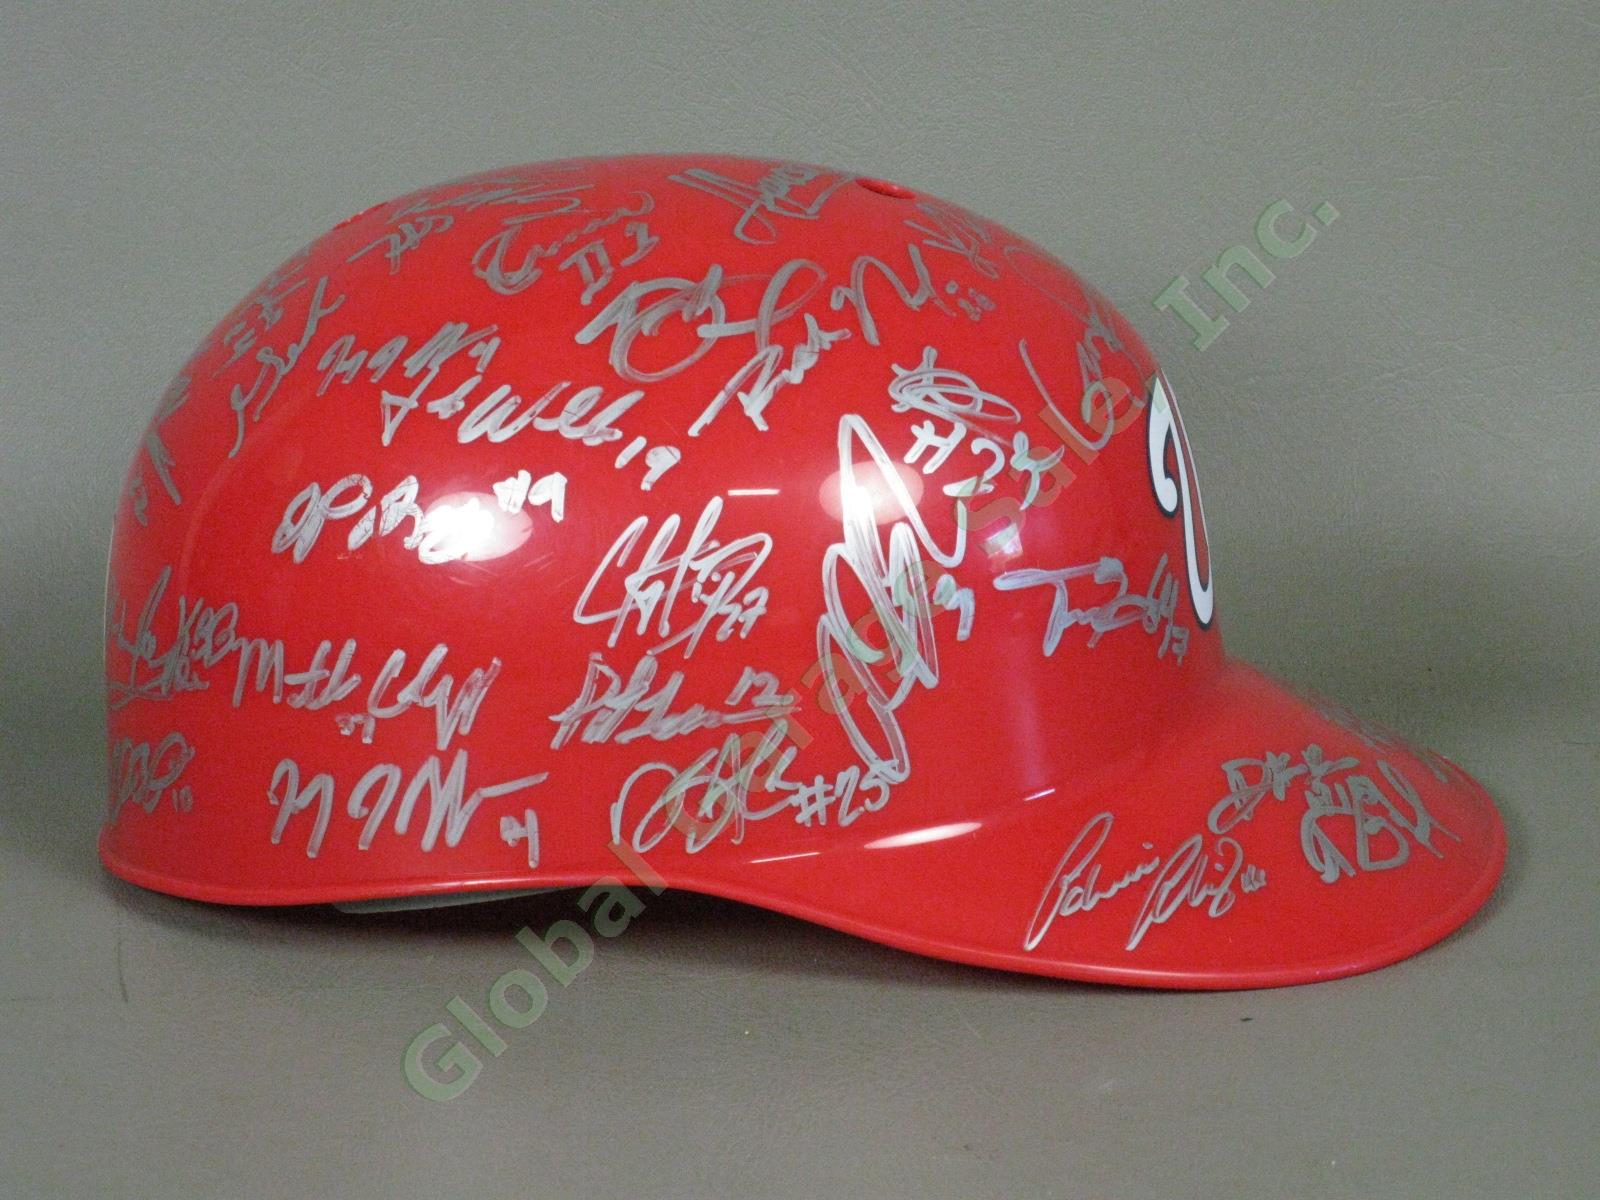 2009 Vermont Lake Monsters Team Signed Baseball Helmet NYPL Washington Nationals 1